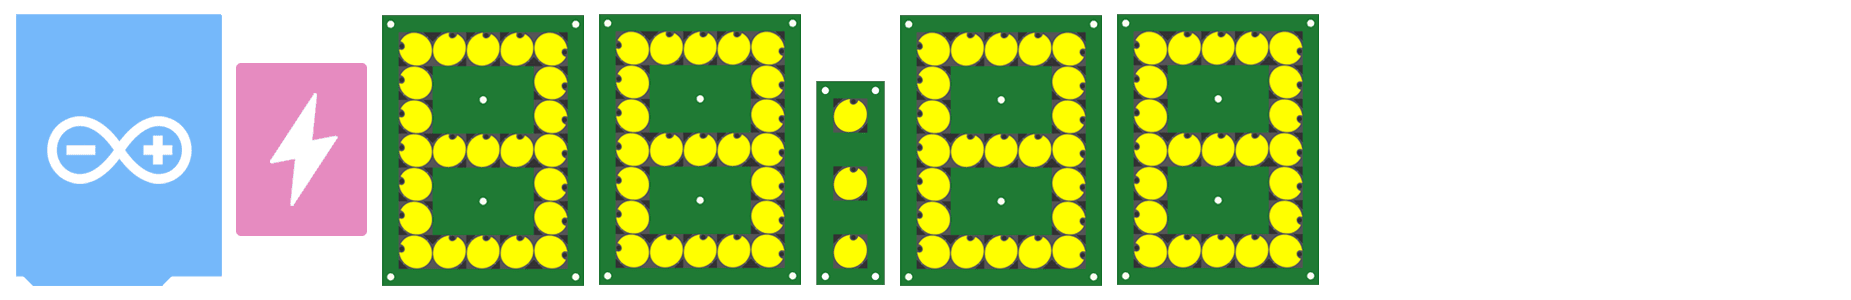 arduino-4x7-seg-3dots-flip-disc-psps-module.png